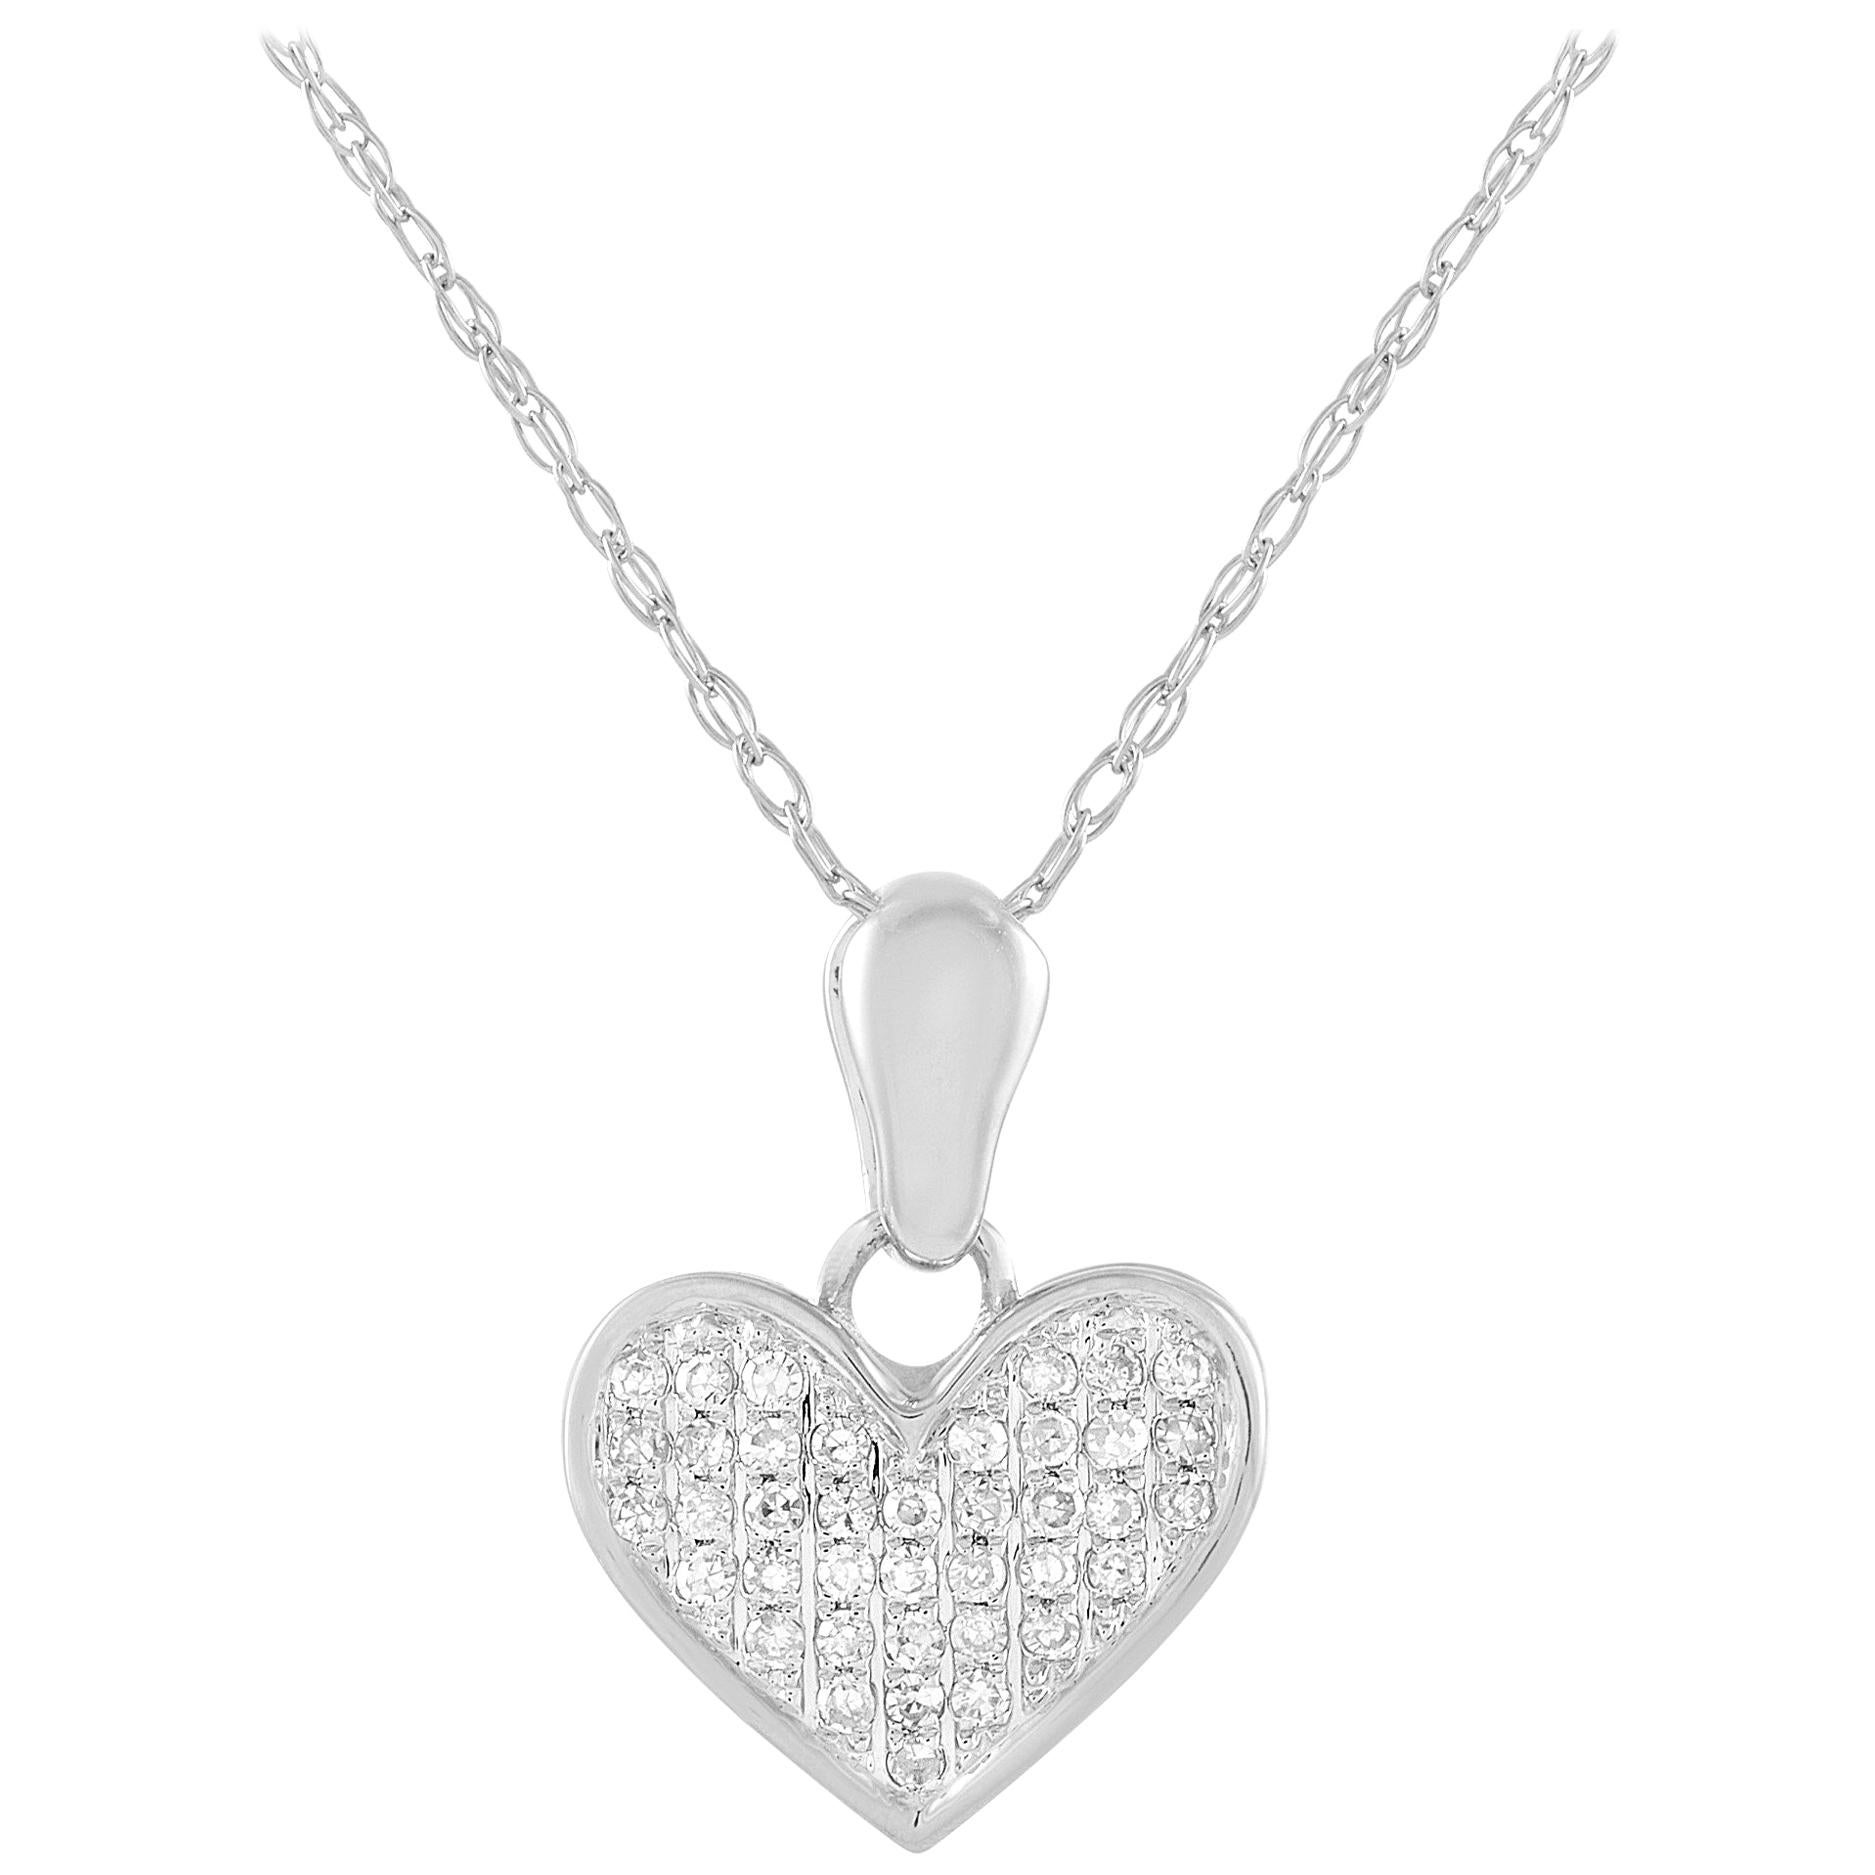 LB Exclusive 14 Karat White Gold 0.08 Carat Diamond Heart Pendant Necklace